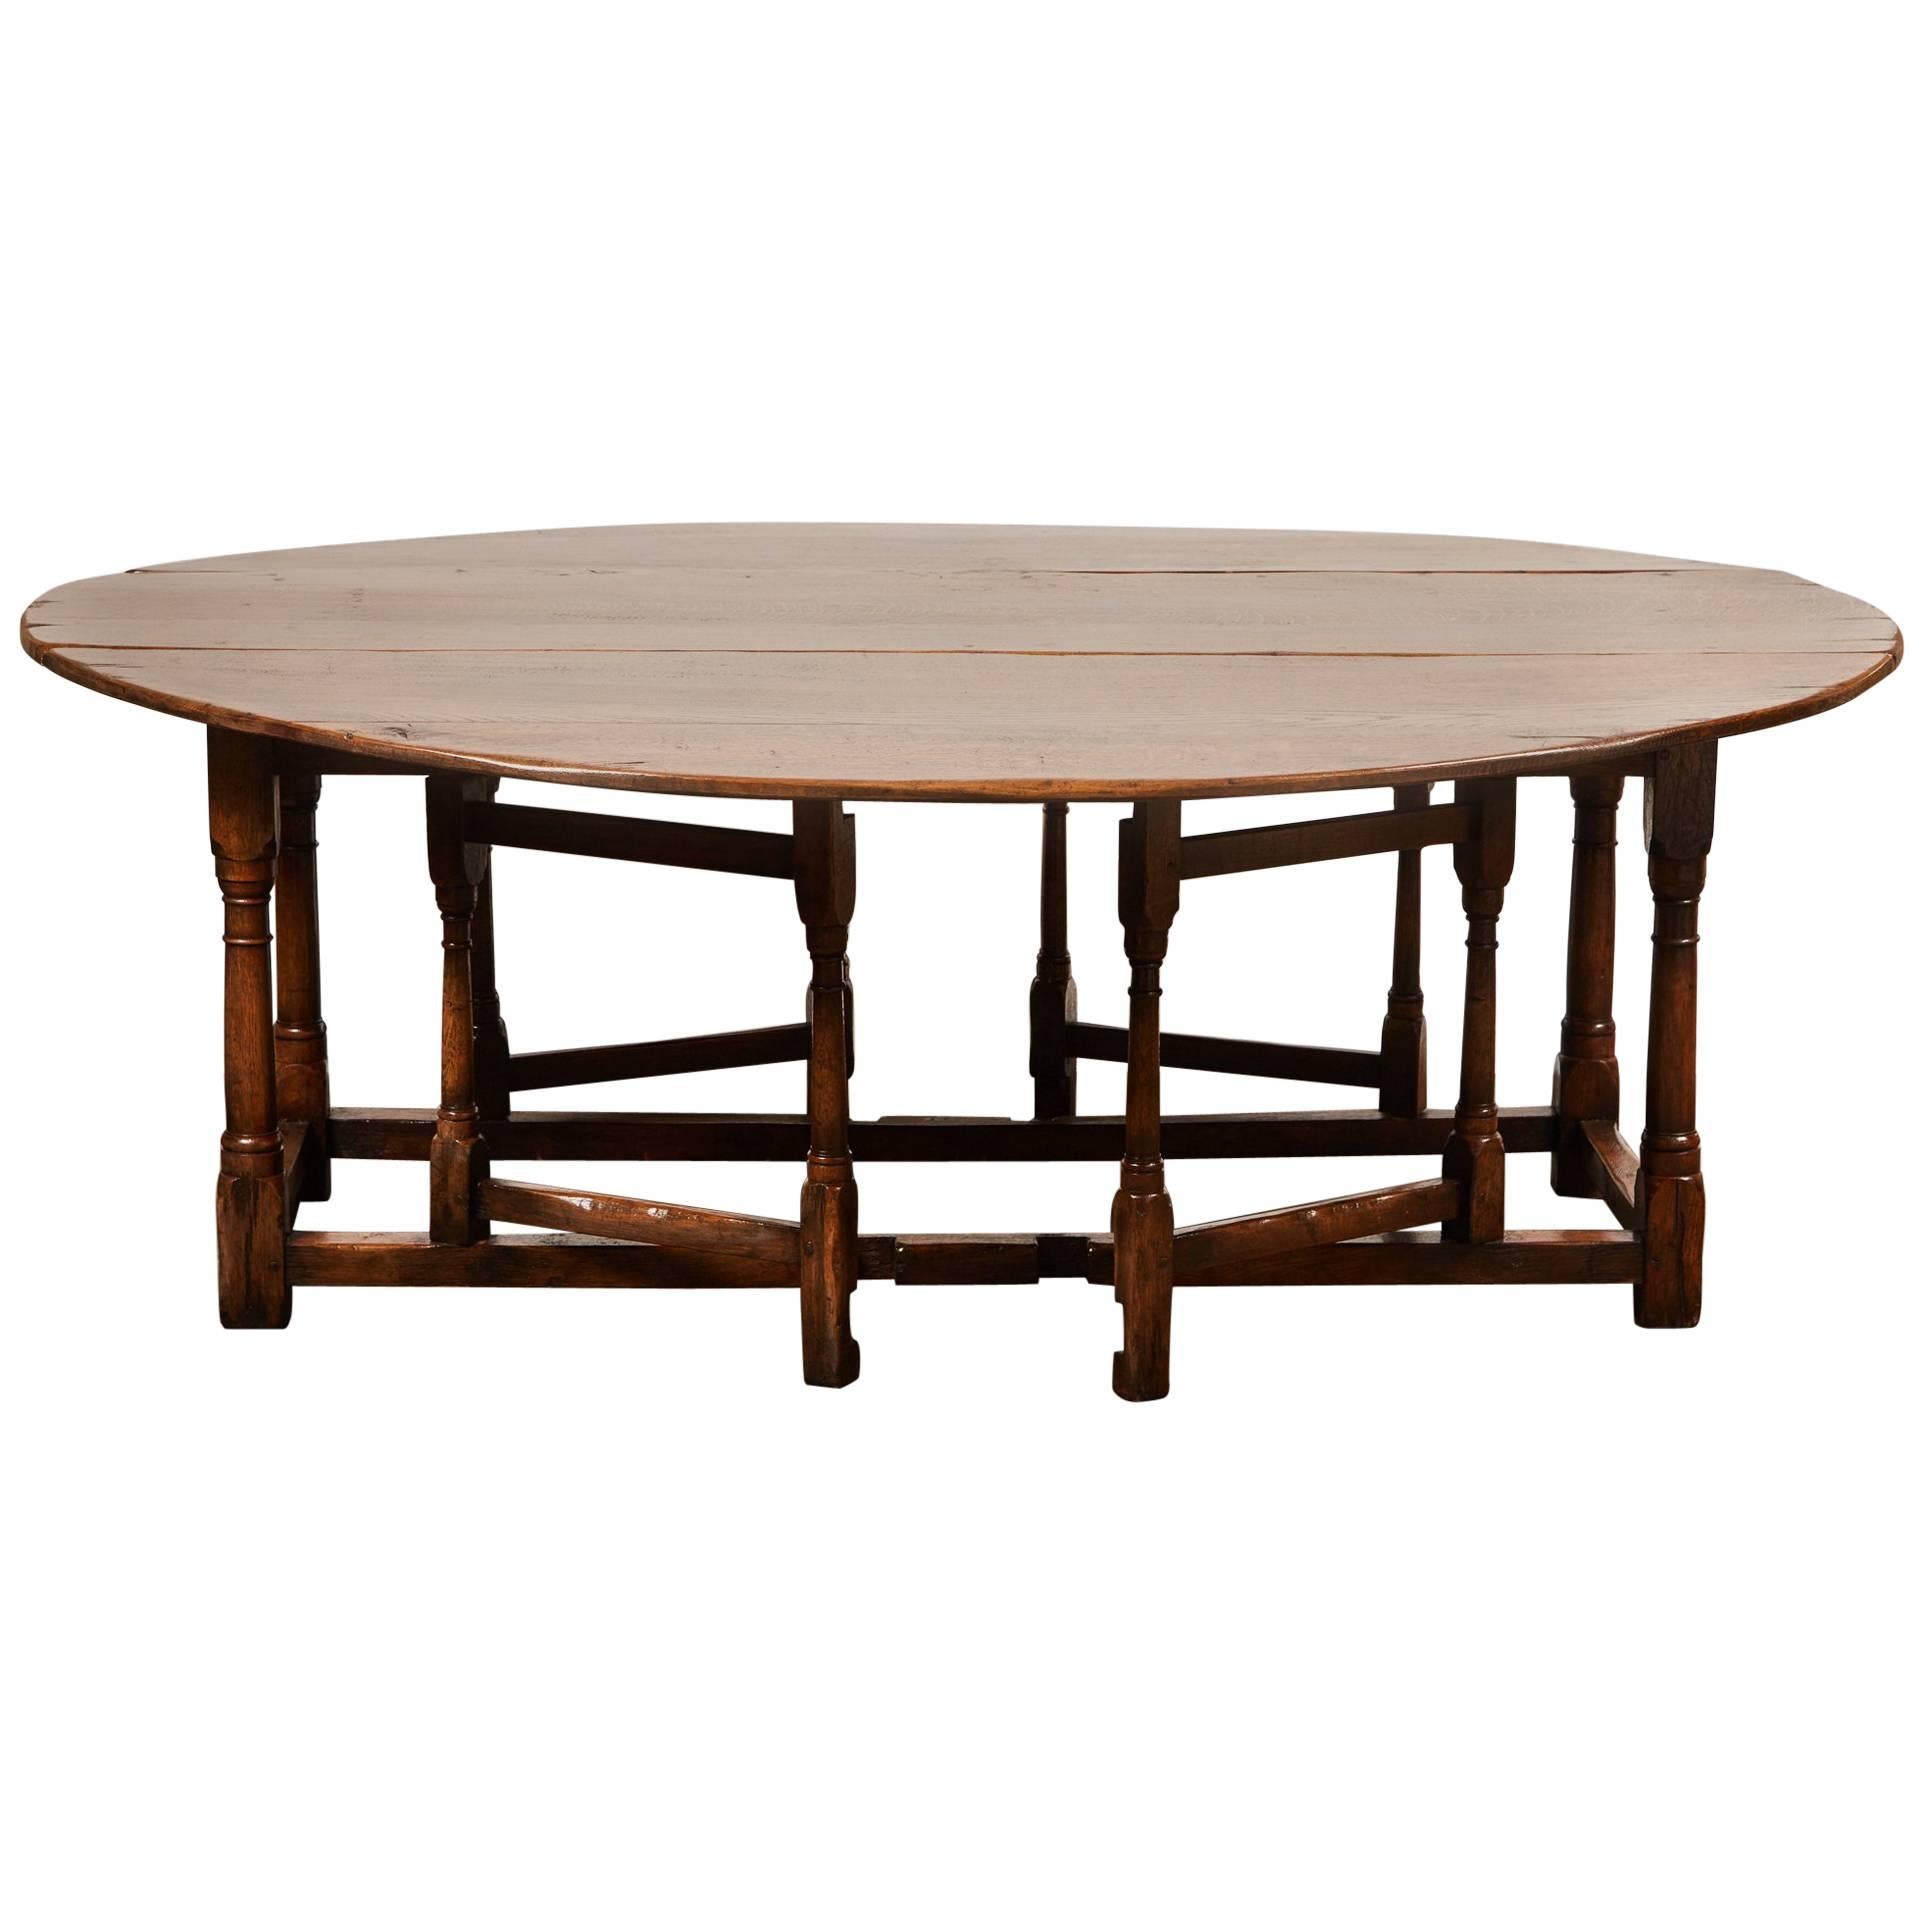 18th Century style English Oak Gateleg Table